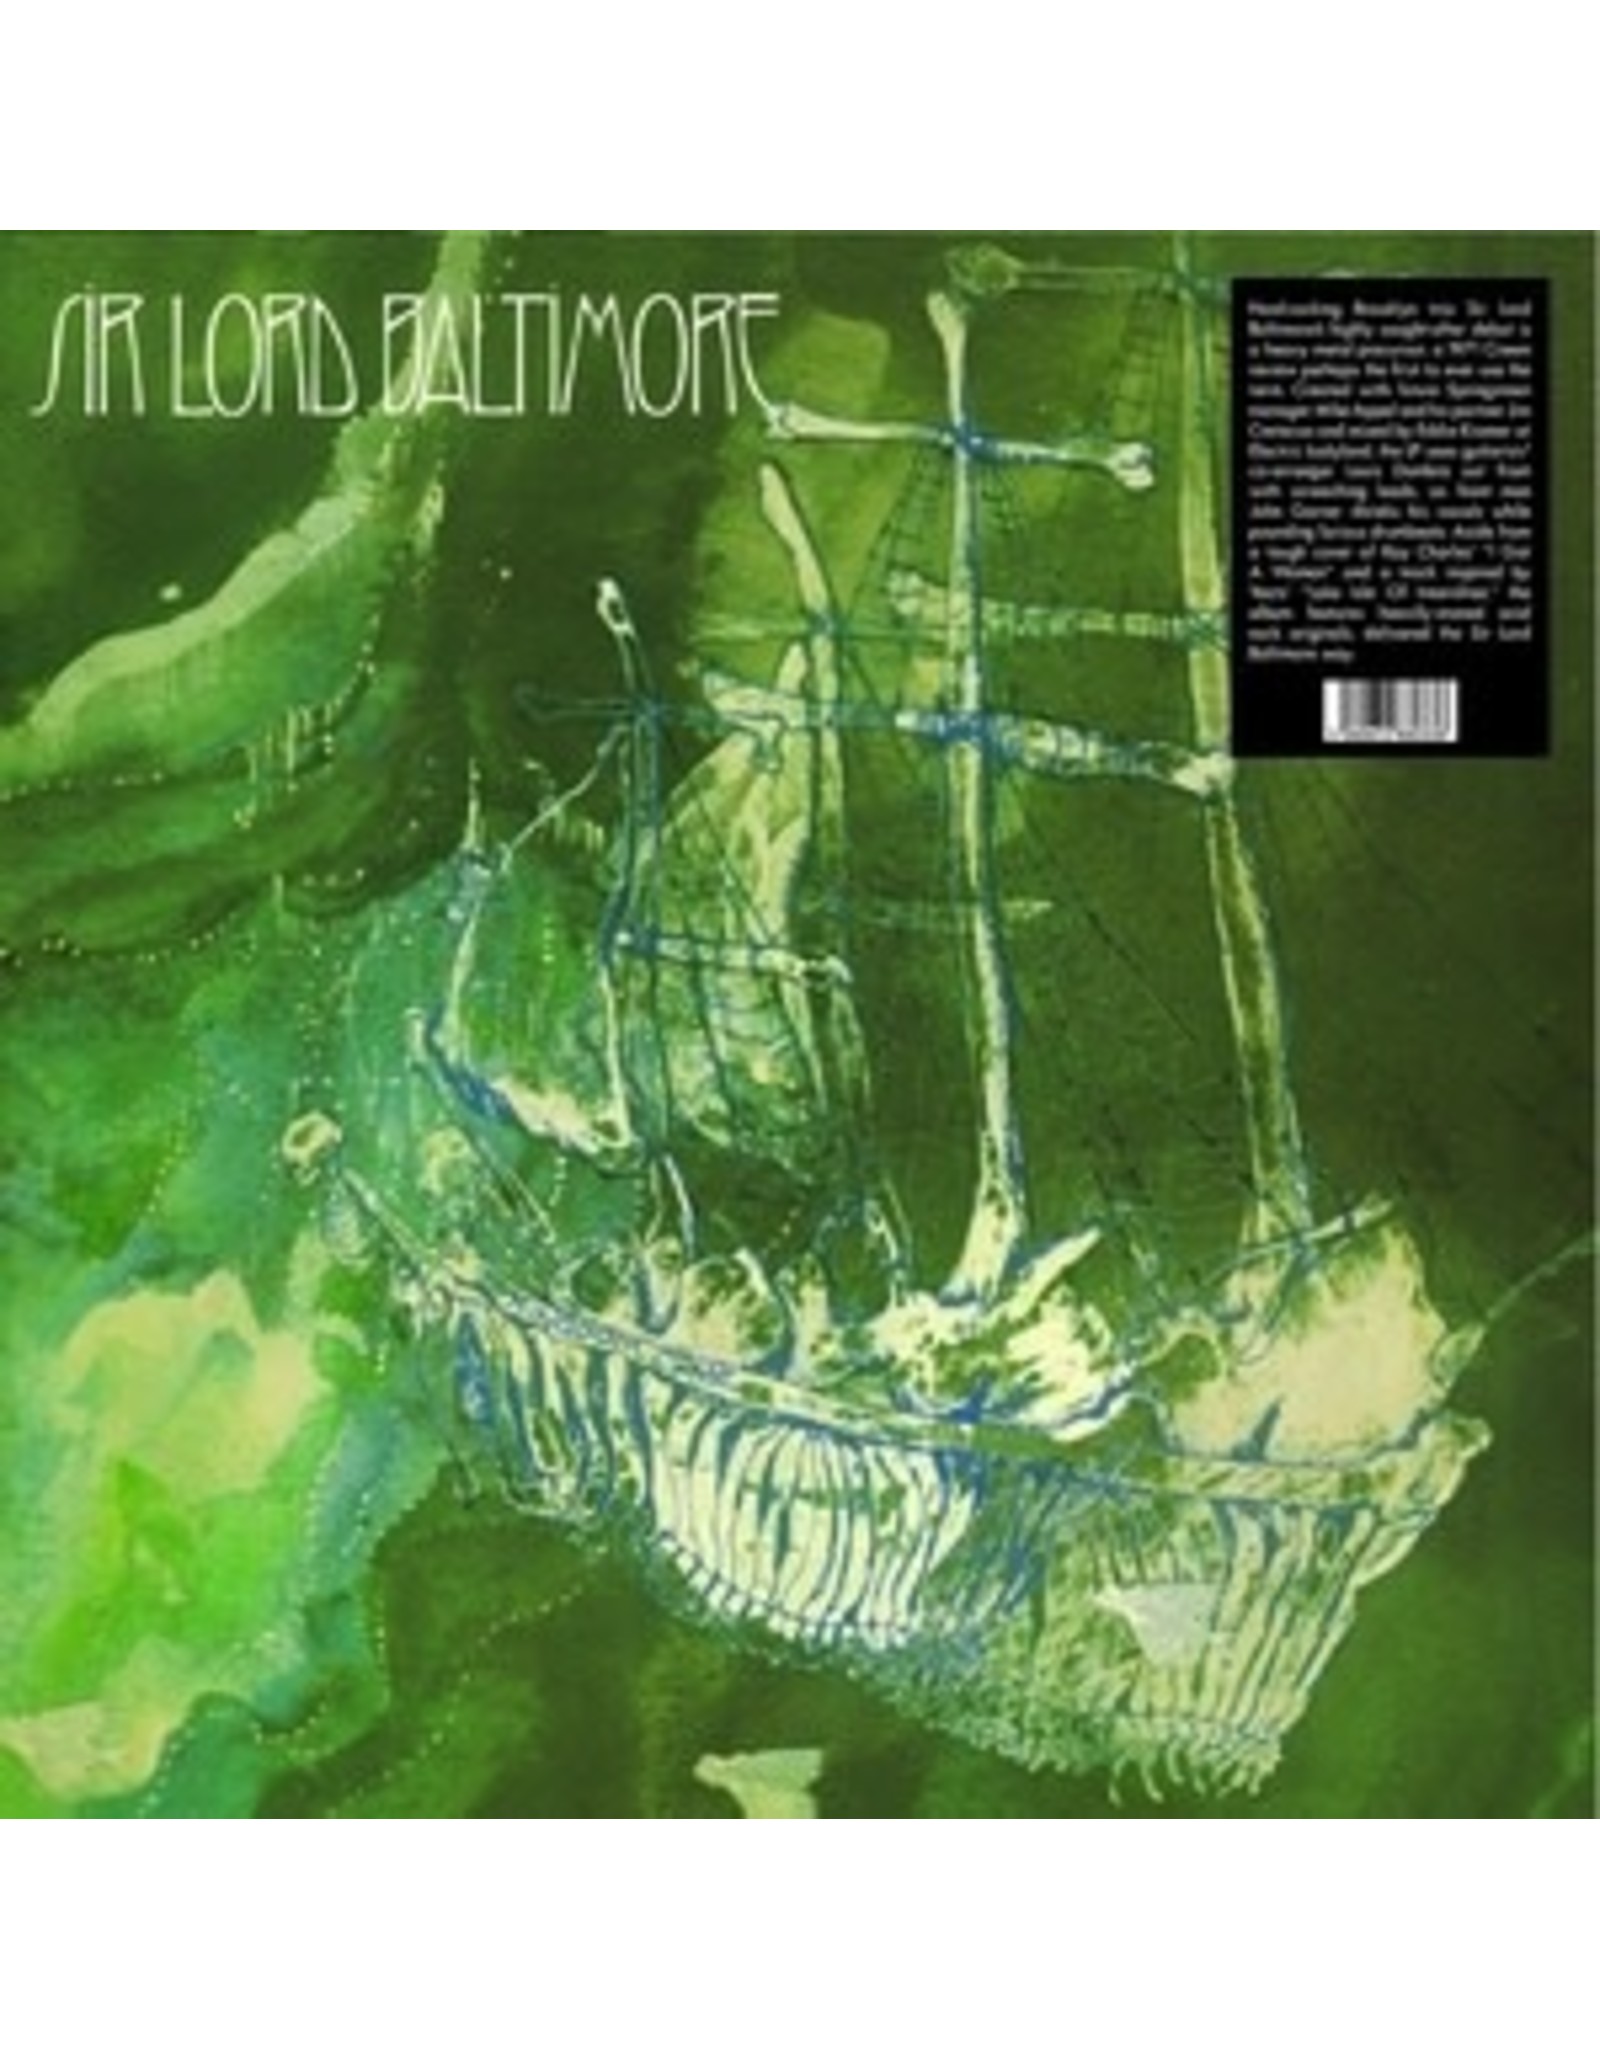 New Vinyl Sir Lord Baltimore - Kingdom Come LP